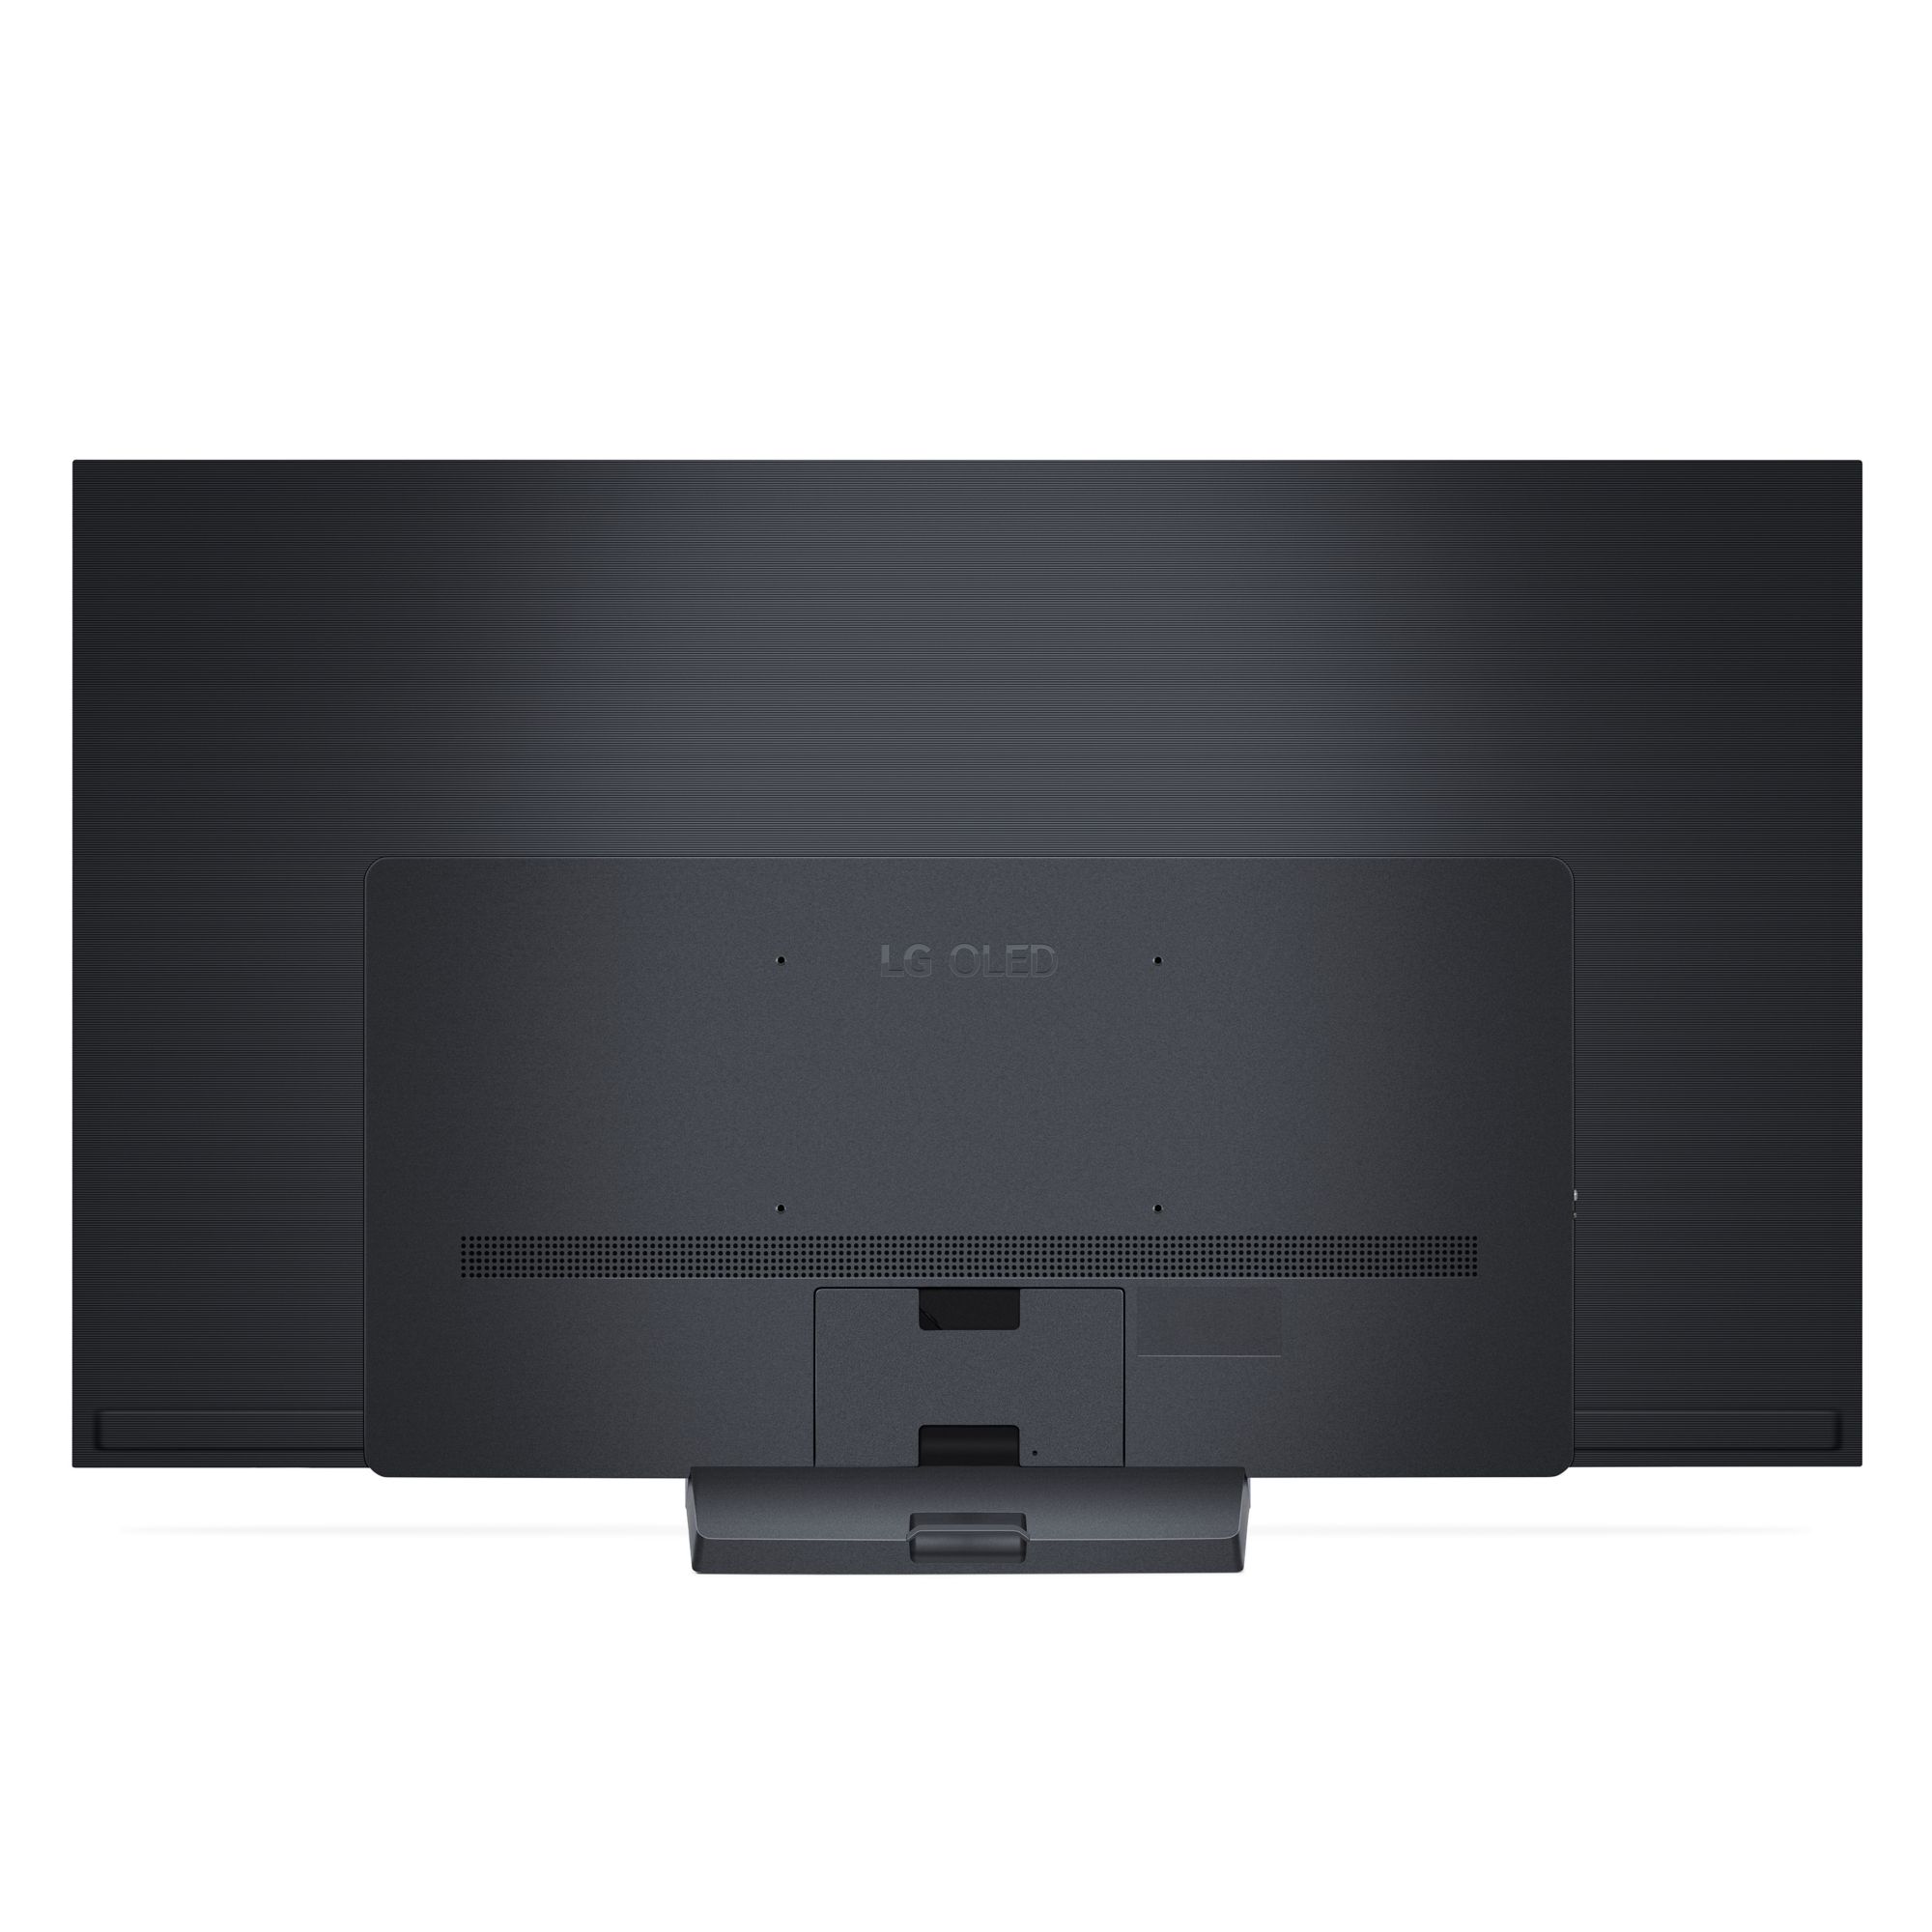 LG 65 OLEDC3 EVO 4K UHD ThinQ AI Smart TV